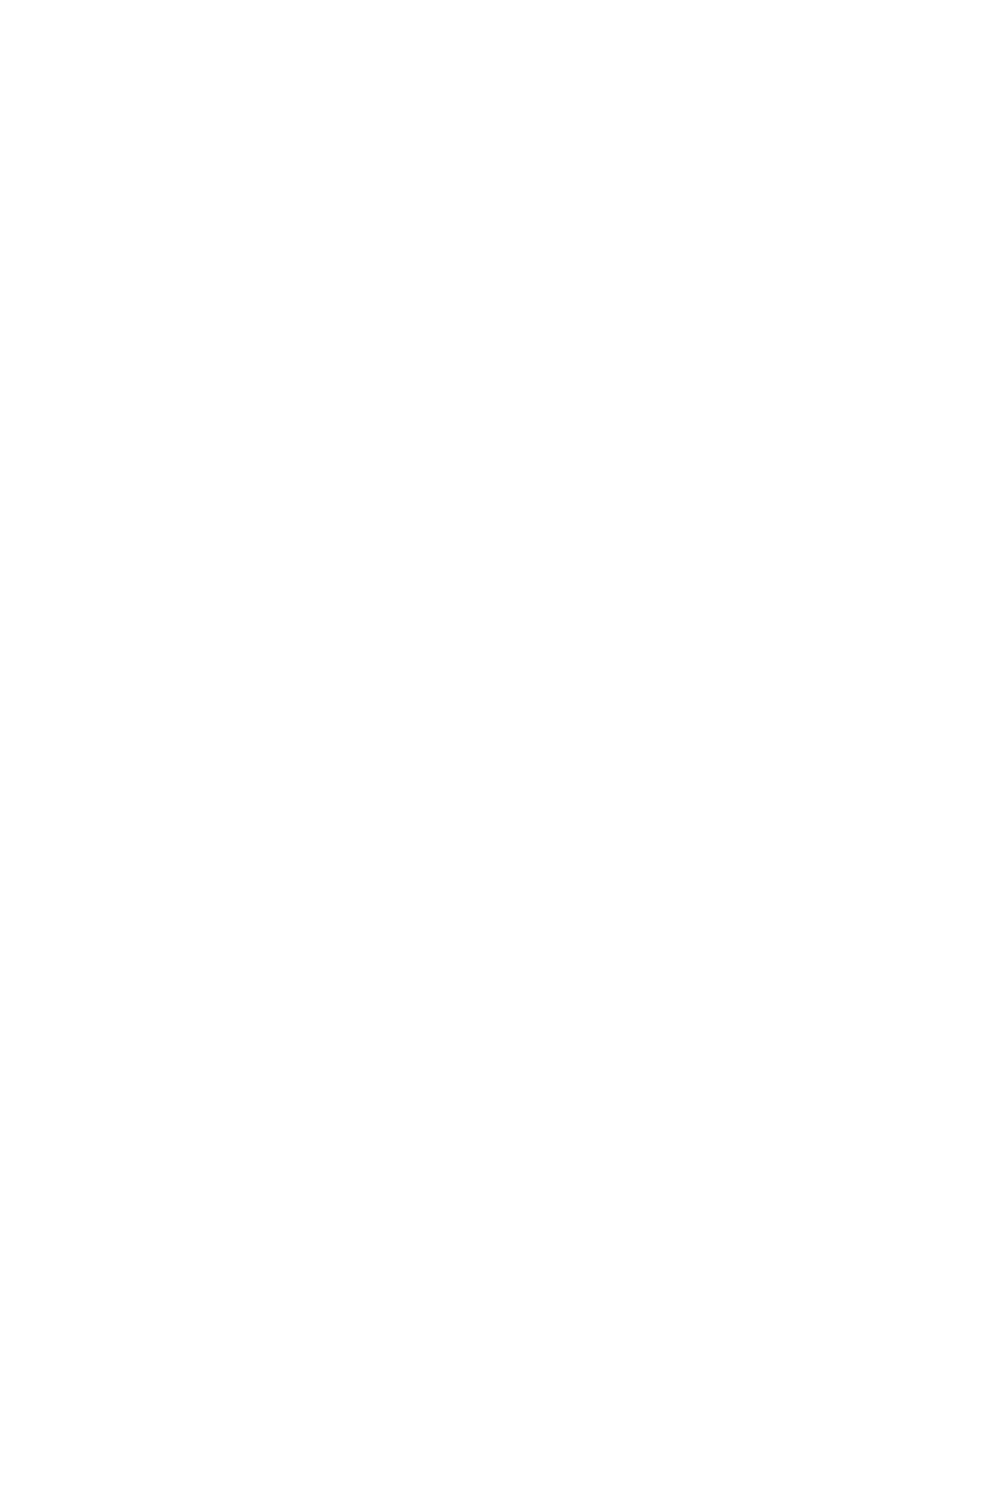 Potter&#39;s Farm Retreat Center